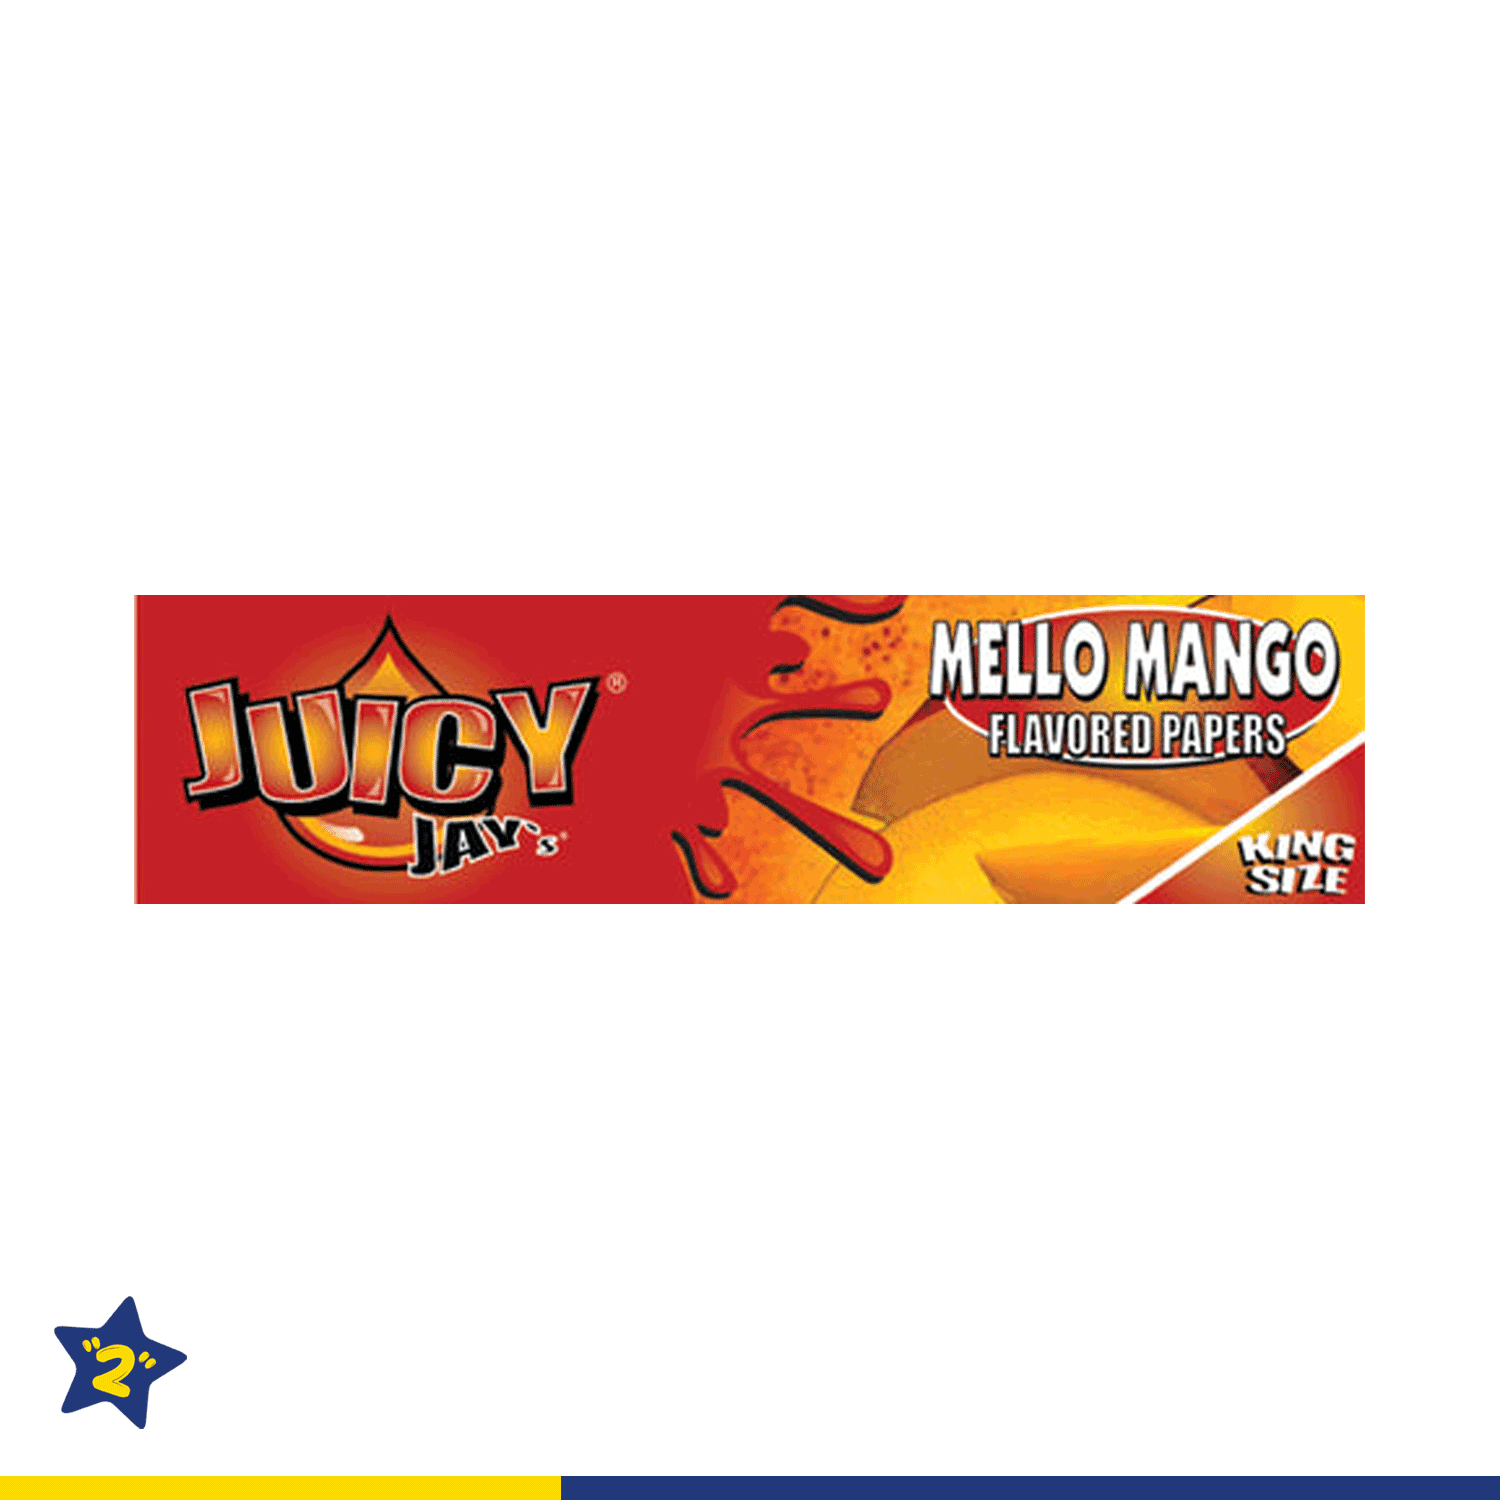 Juicy Jay's Rolling Paper Mello Mango